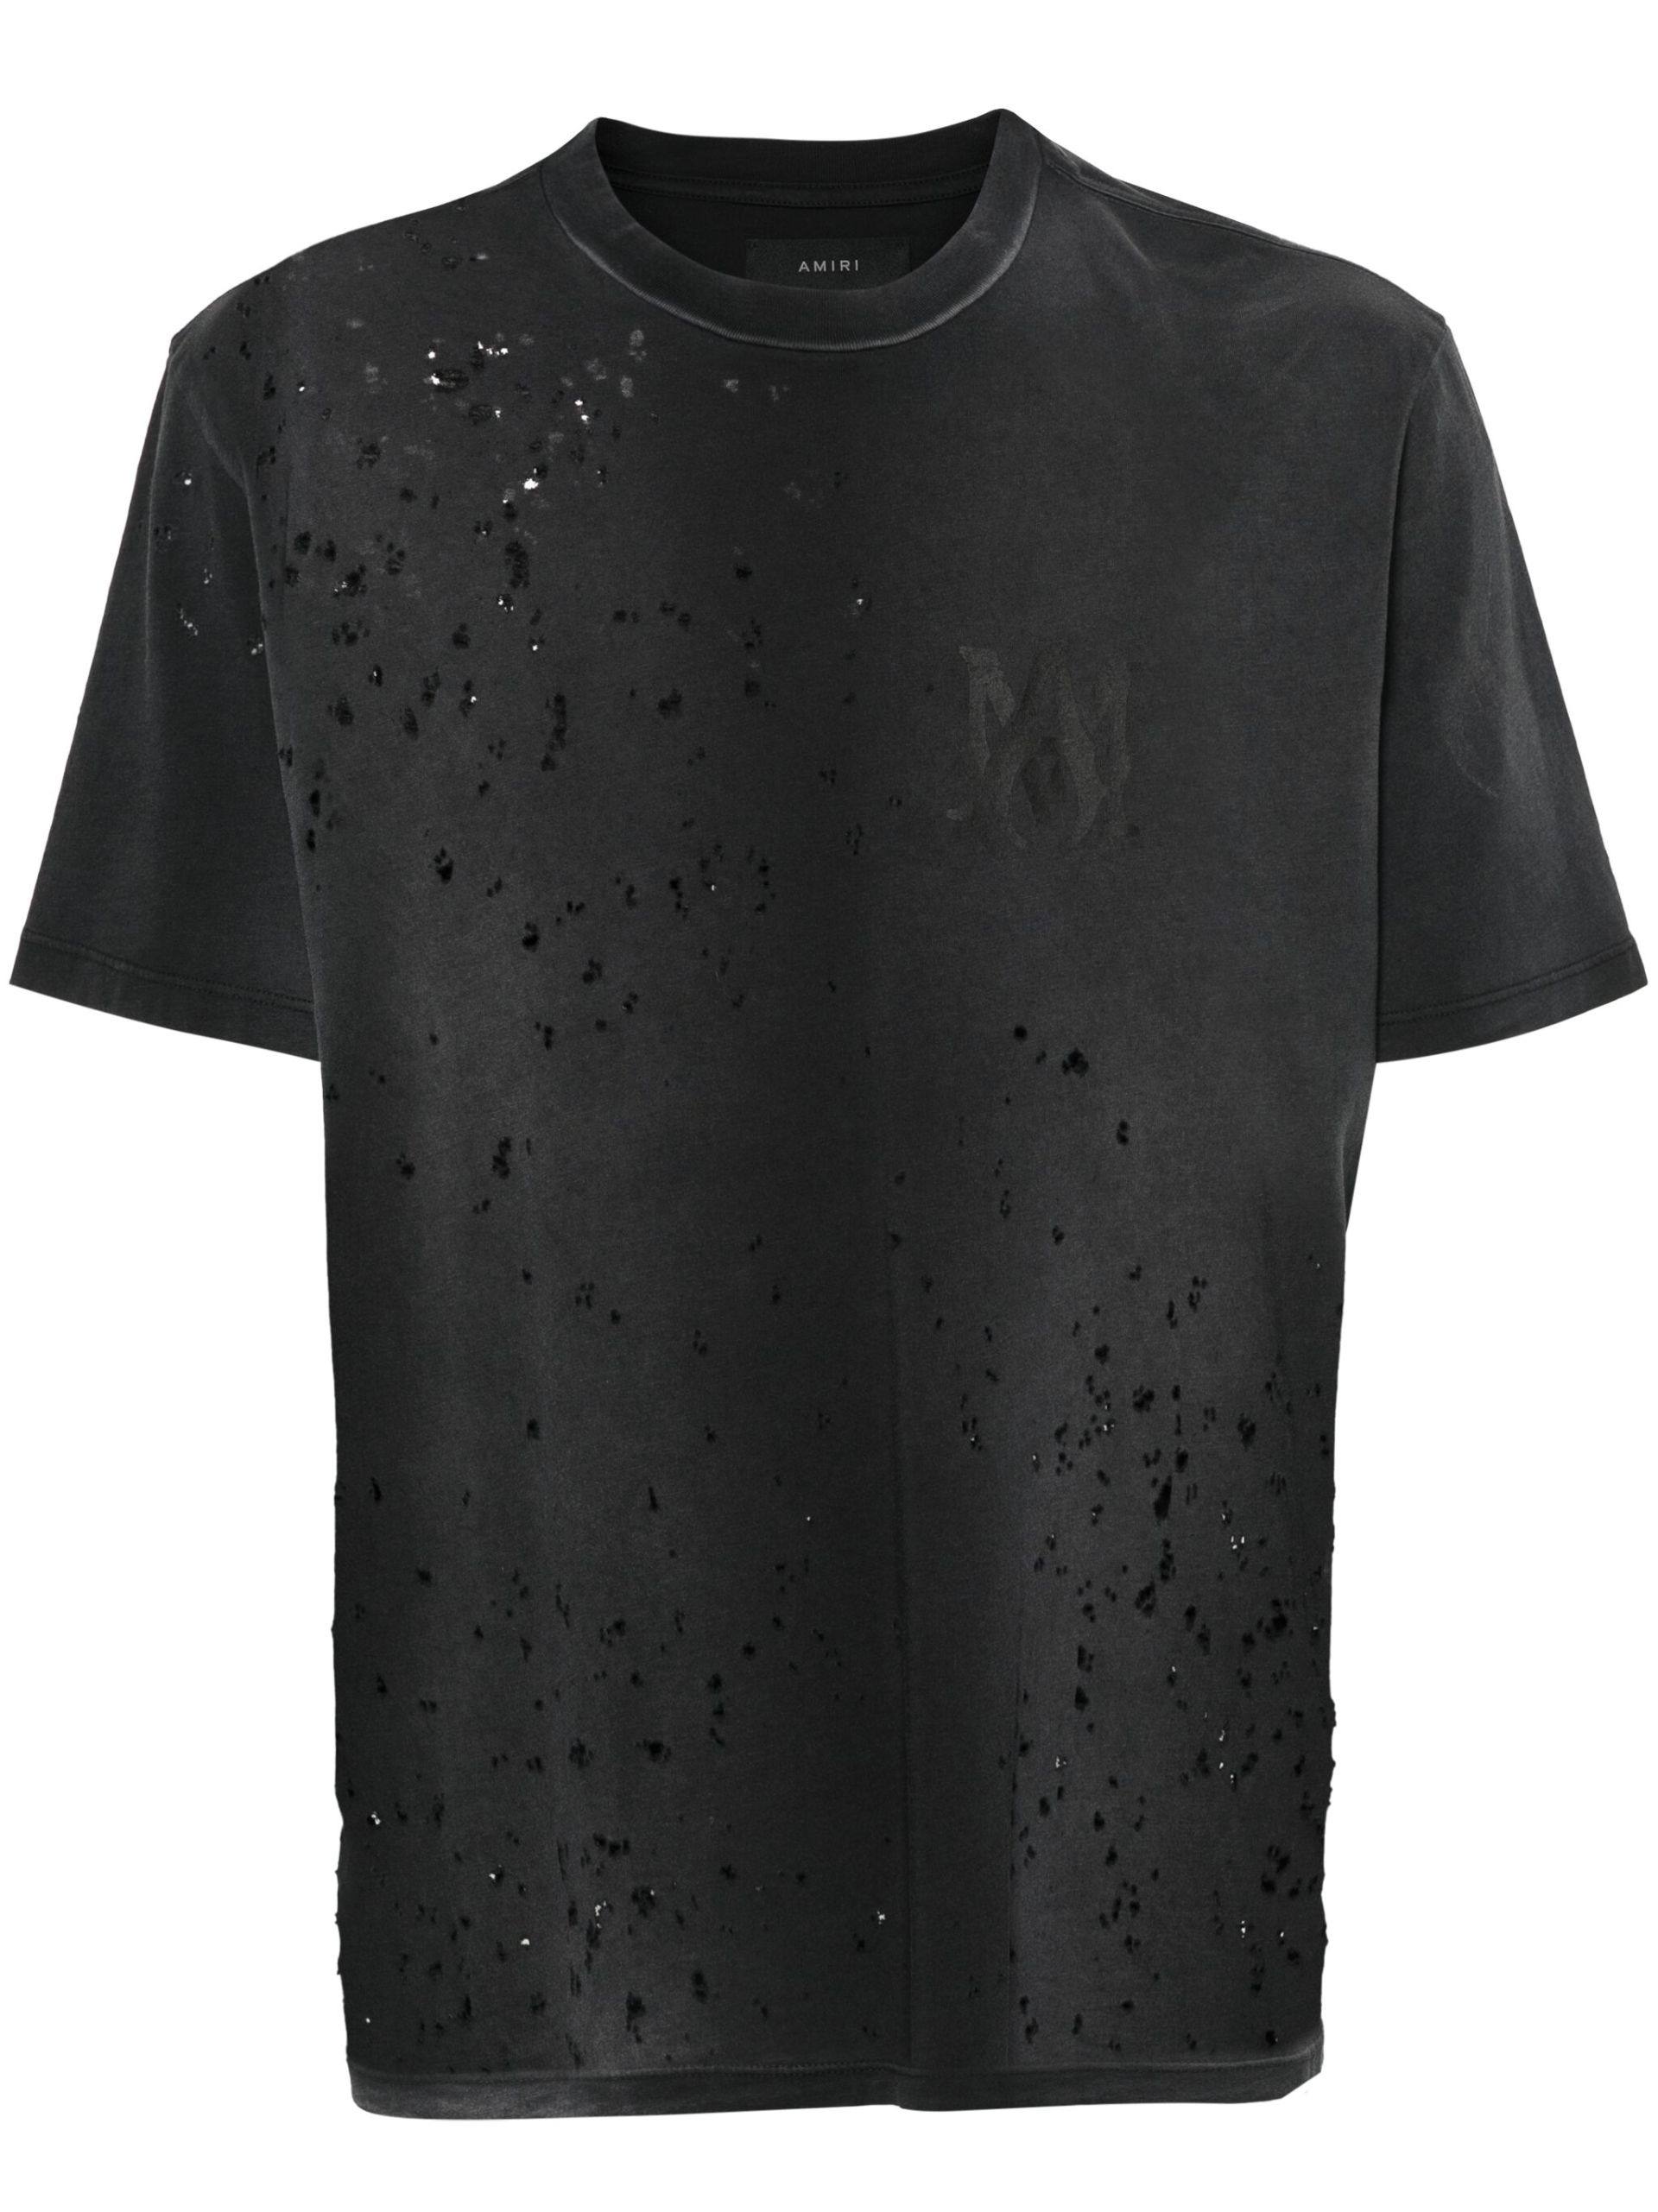 Black MA Logo Print Distressed T-Shirt - 1